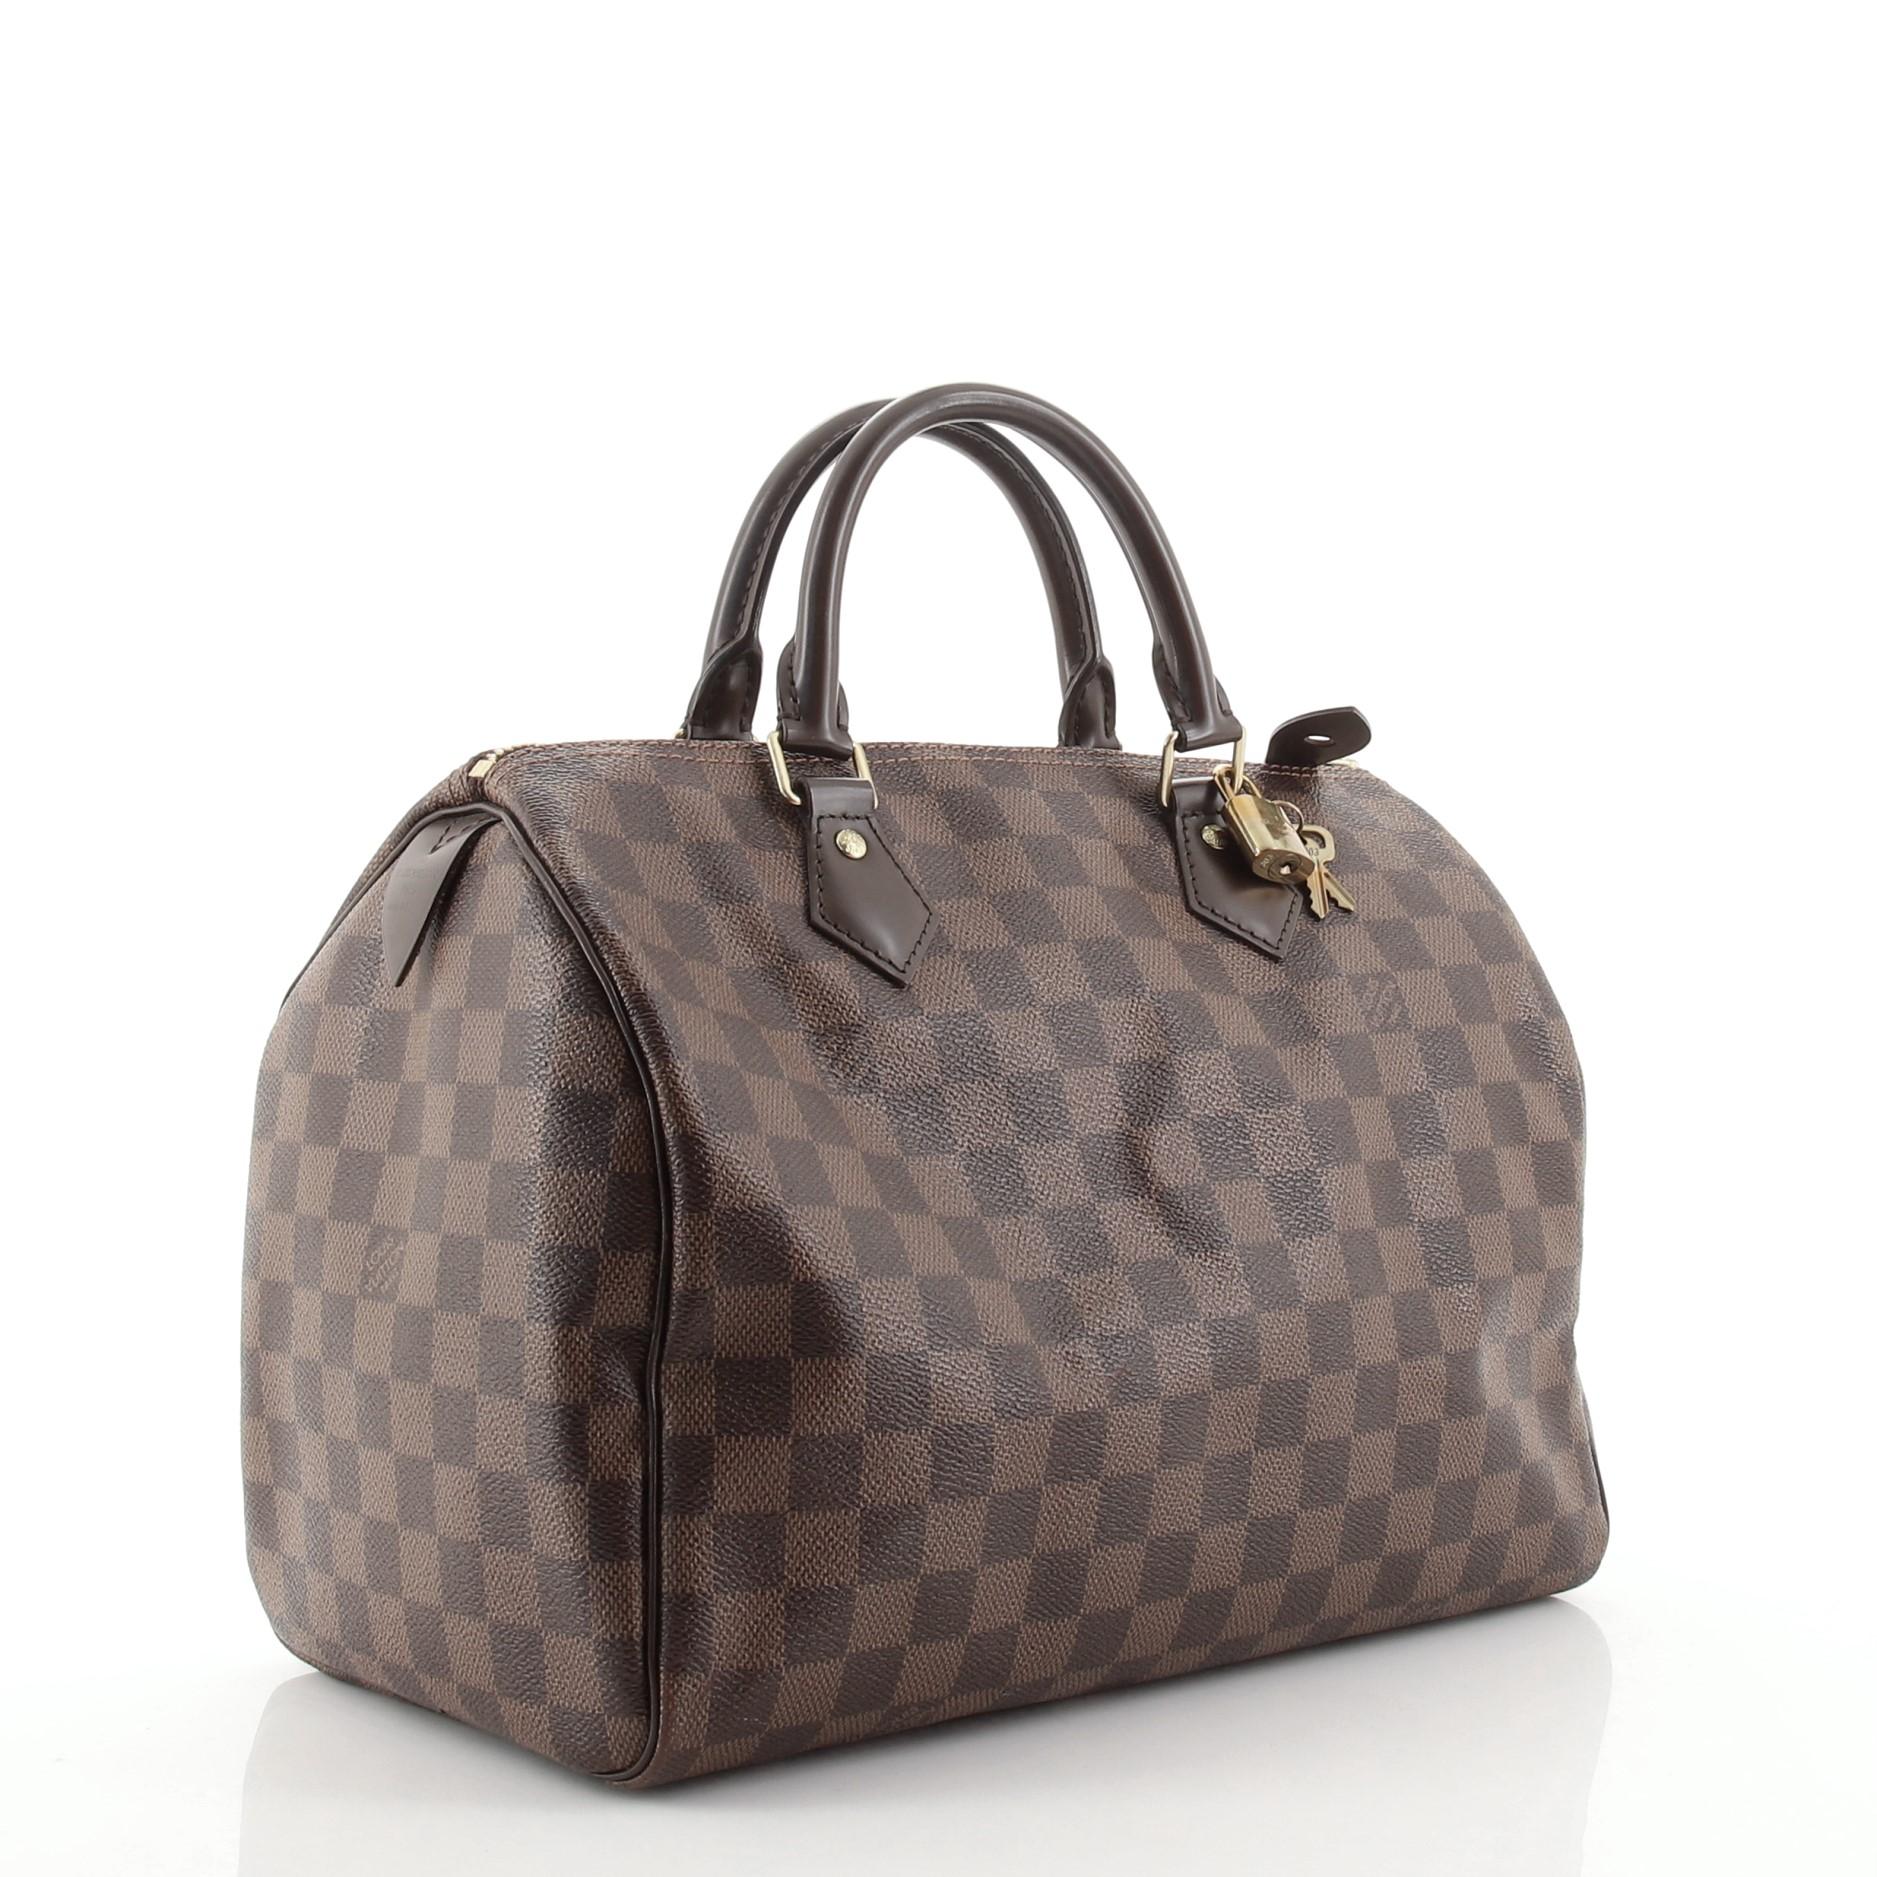 Black Louis Vuitton Speedy Handbag Damier 30